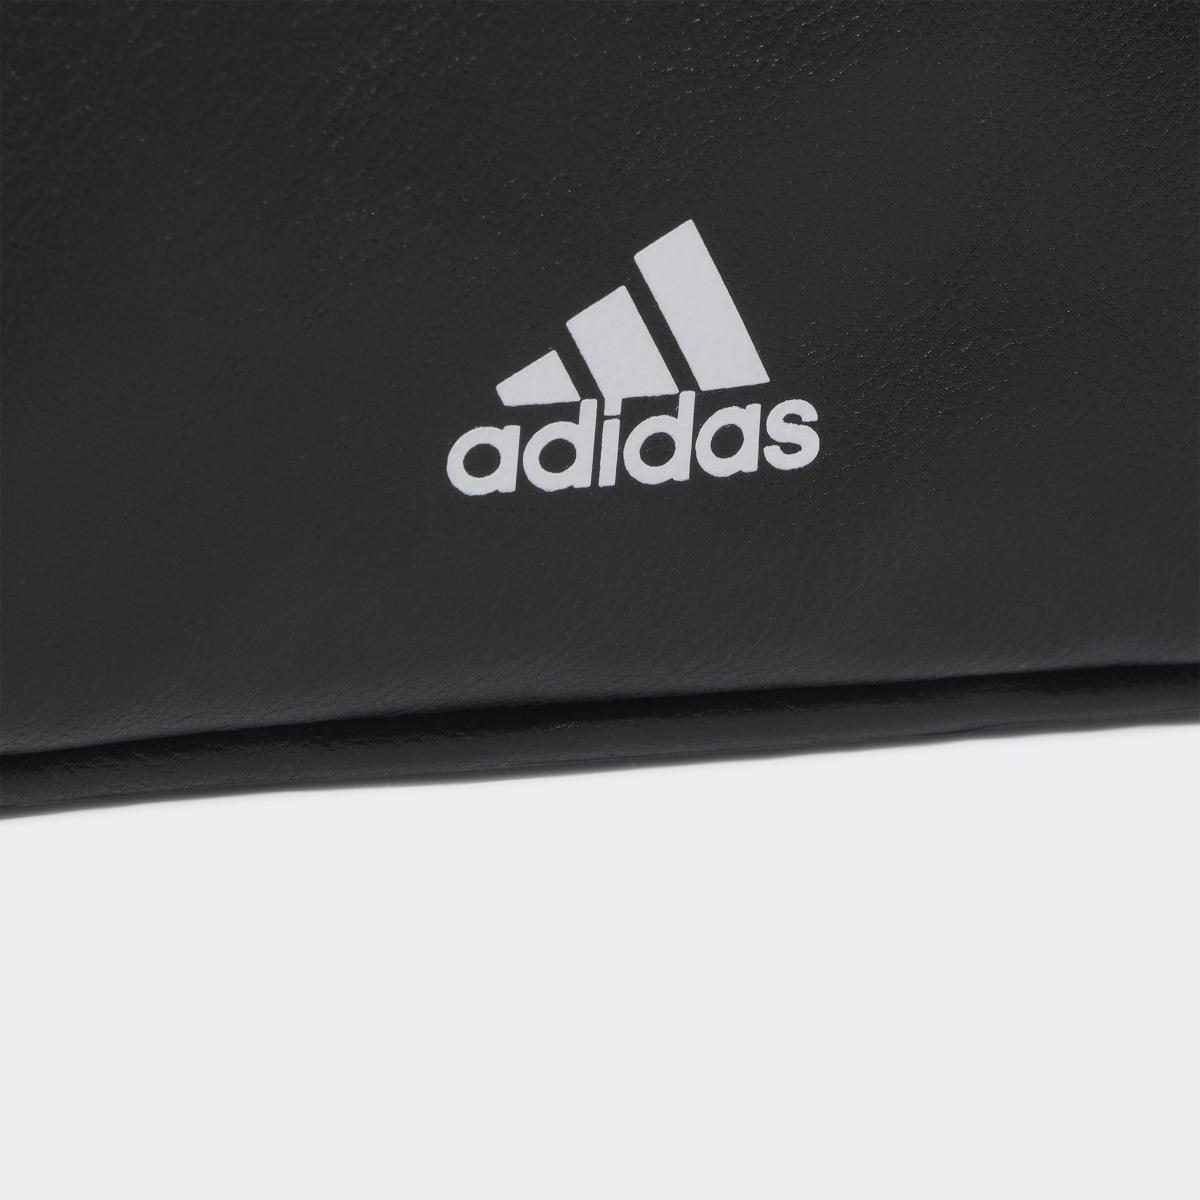 Adidas Back to School Small Bag. 6